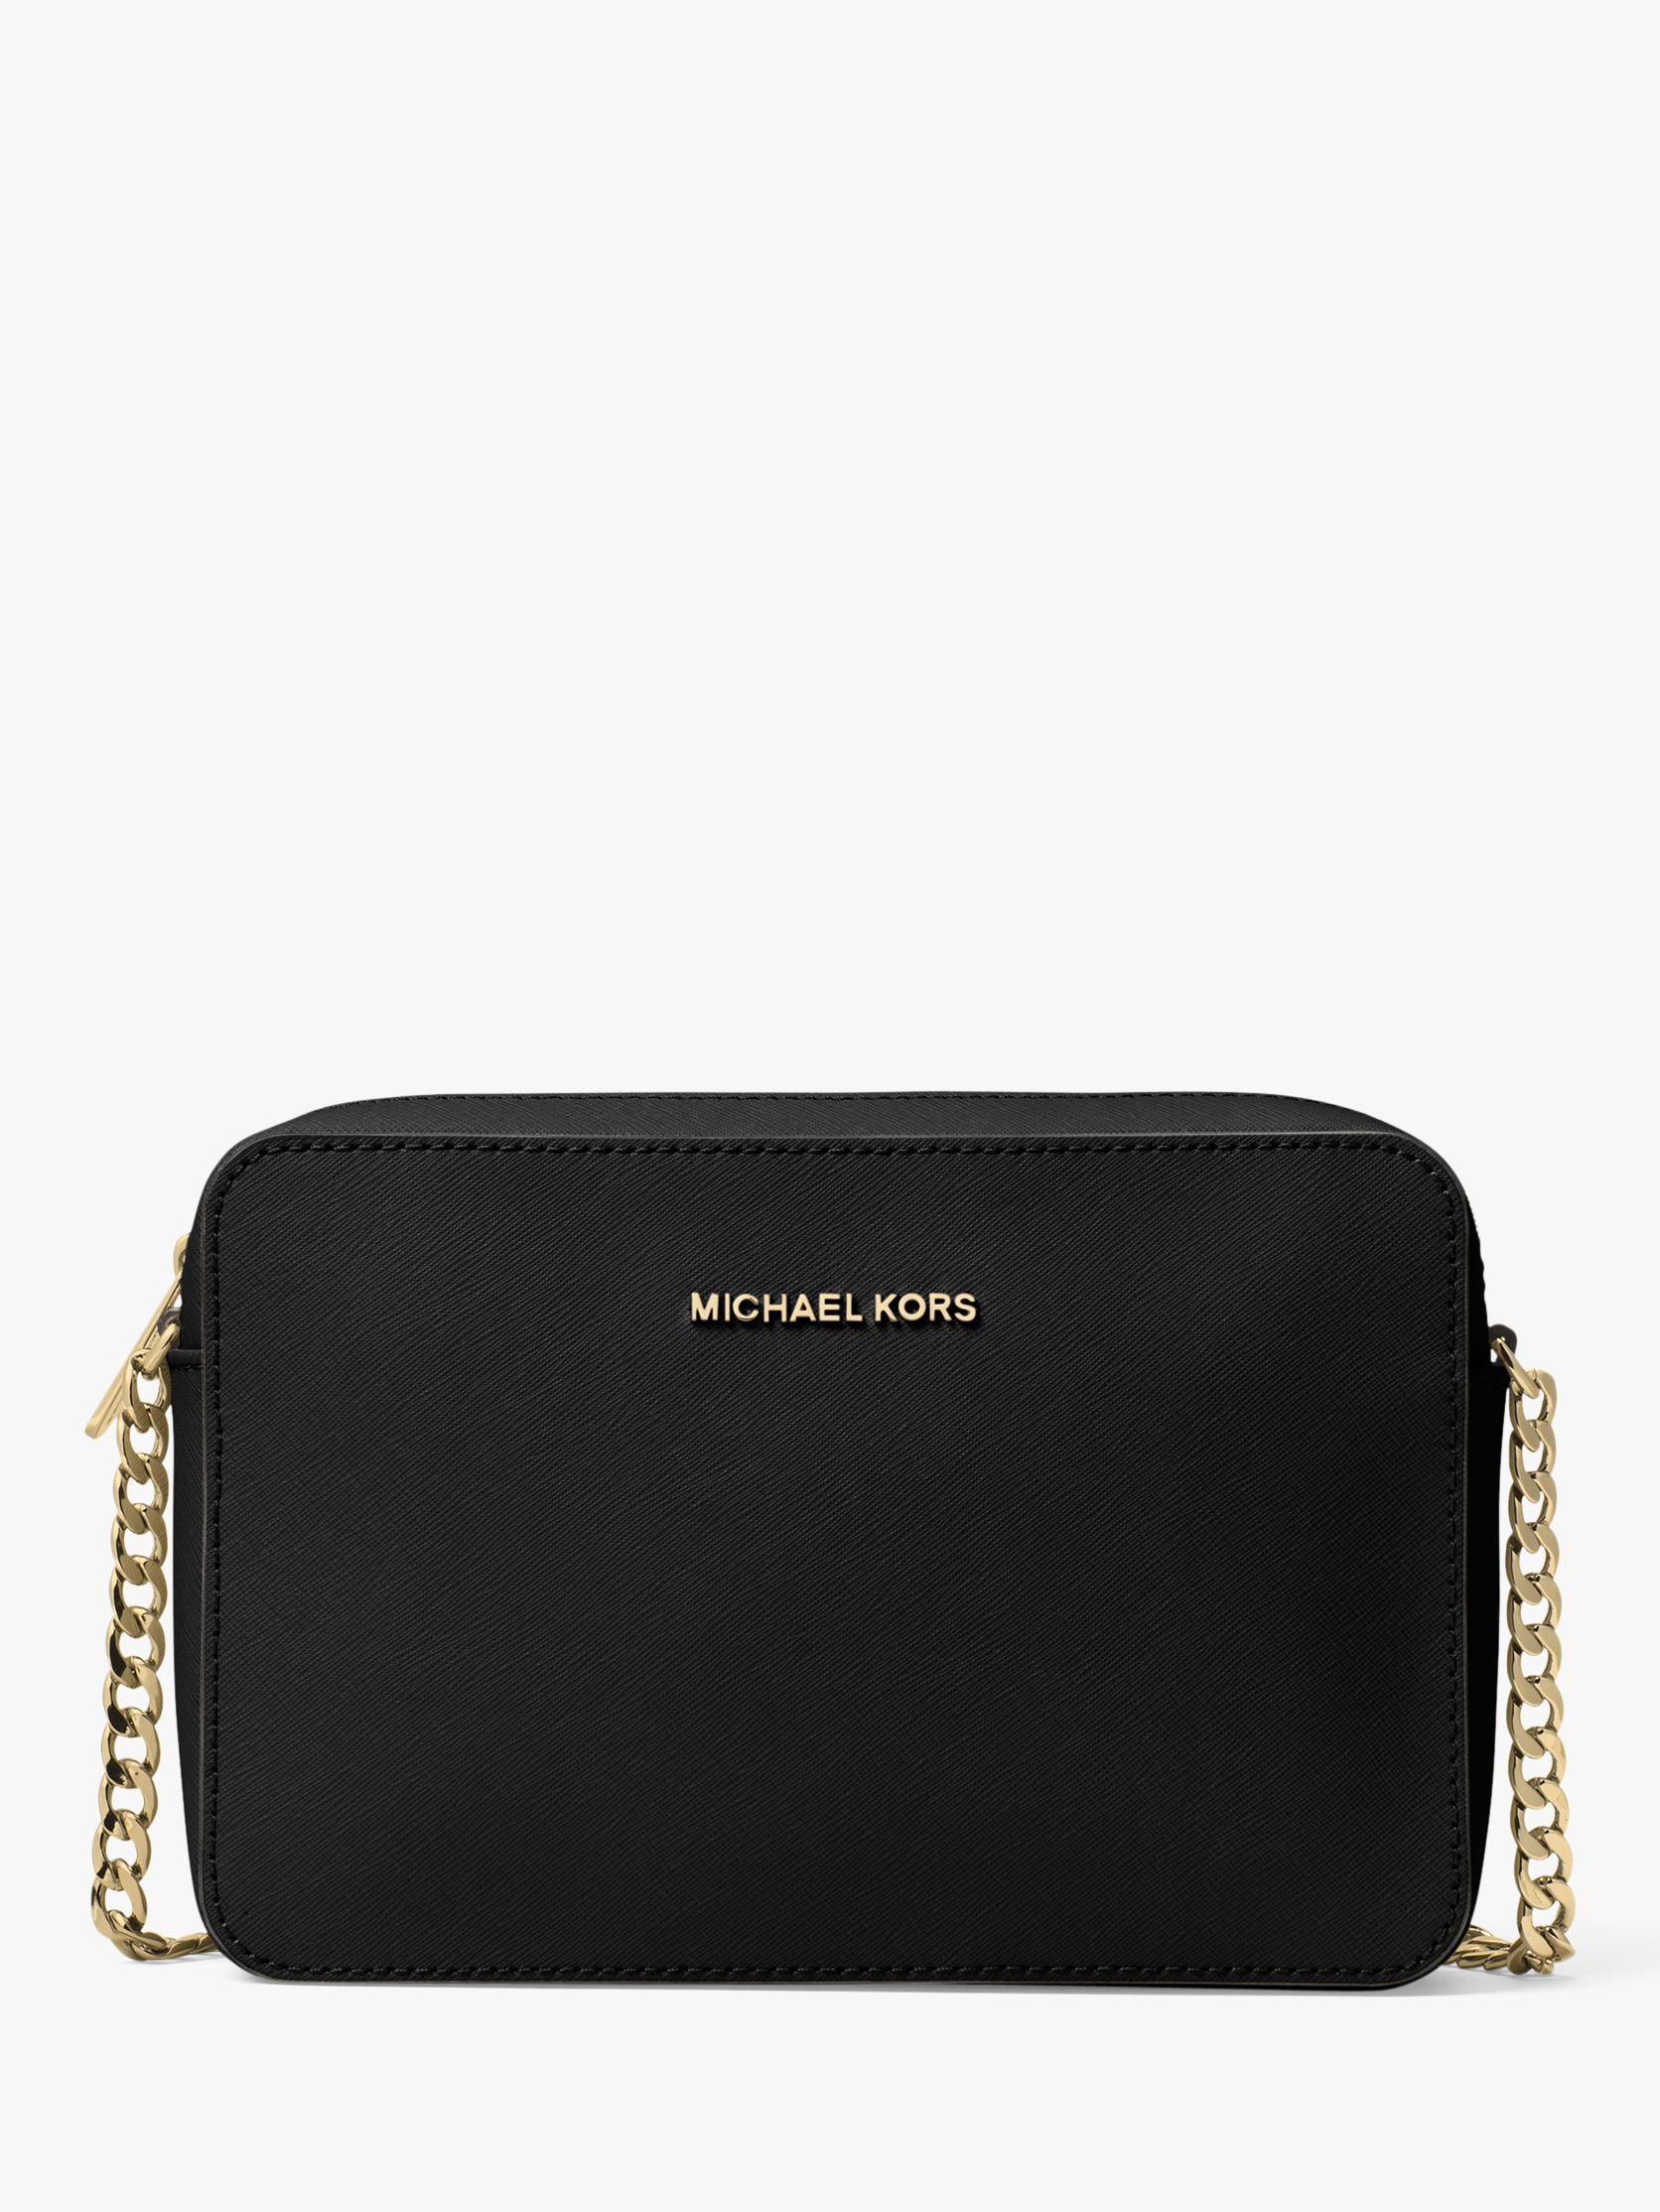 Michael Kors Jet Set Large Saffiano Leather Crossbody Bag in Black/Gold (Black) - Lyst